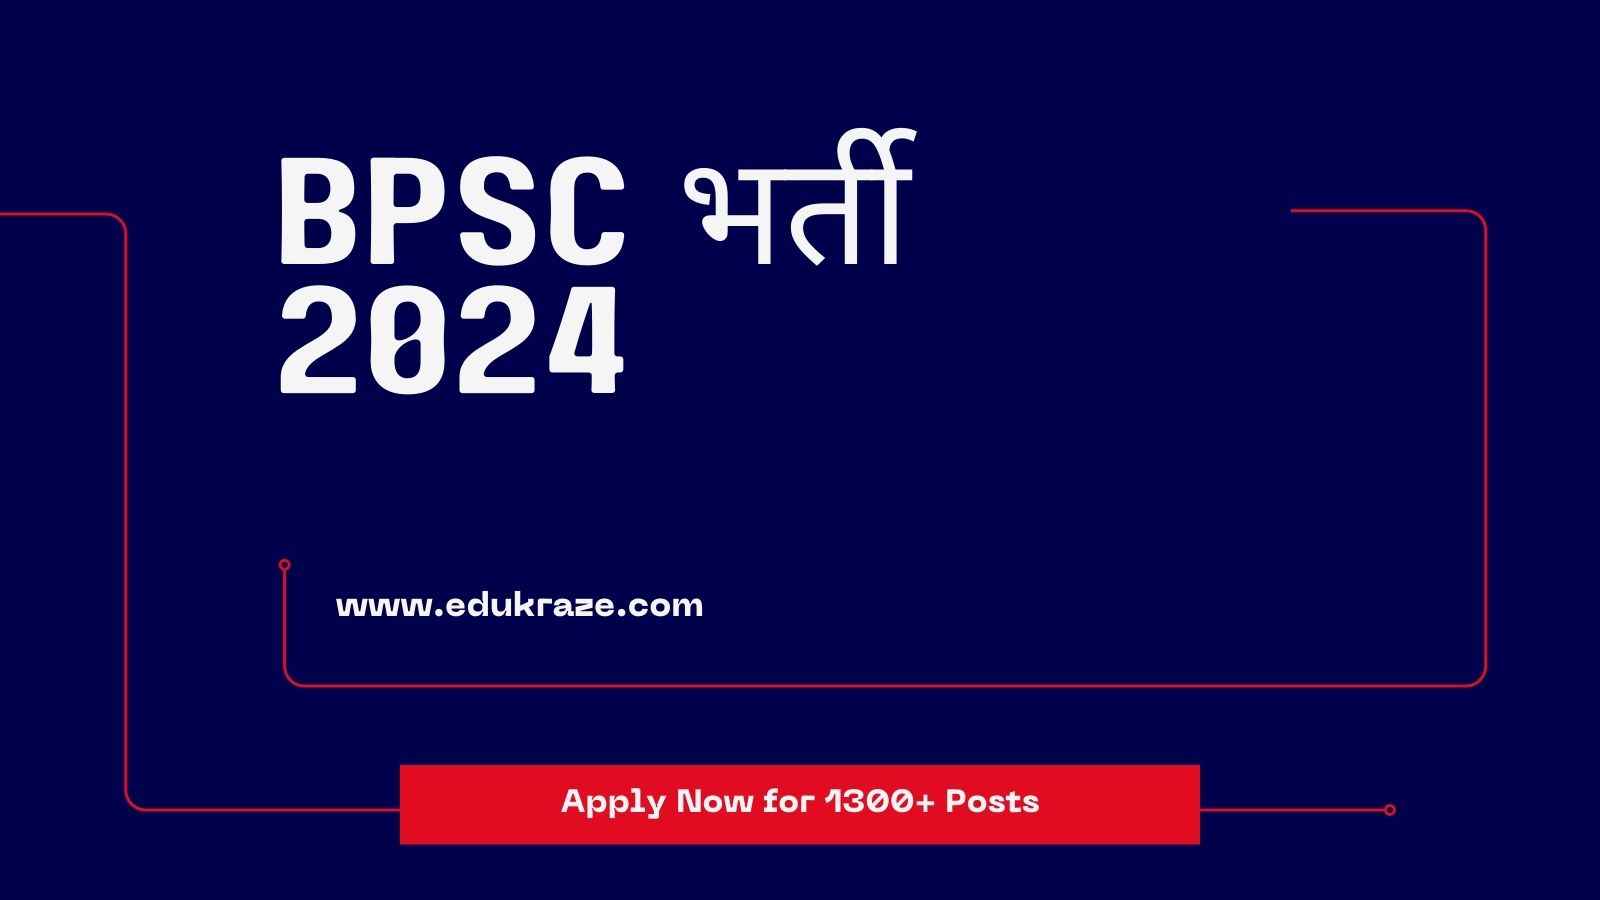 BPSC Recruitment 2024: Bumper Recruitment for 1300+ Posts